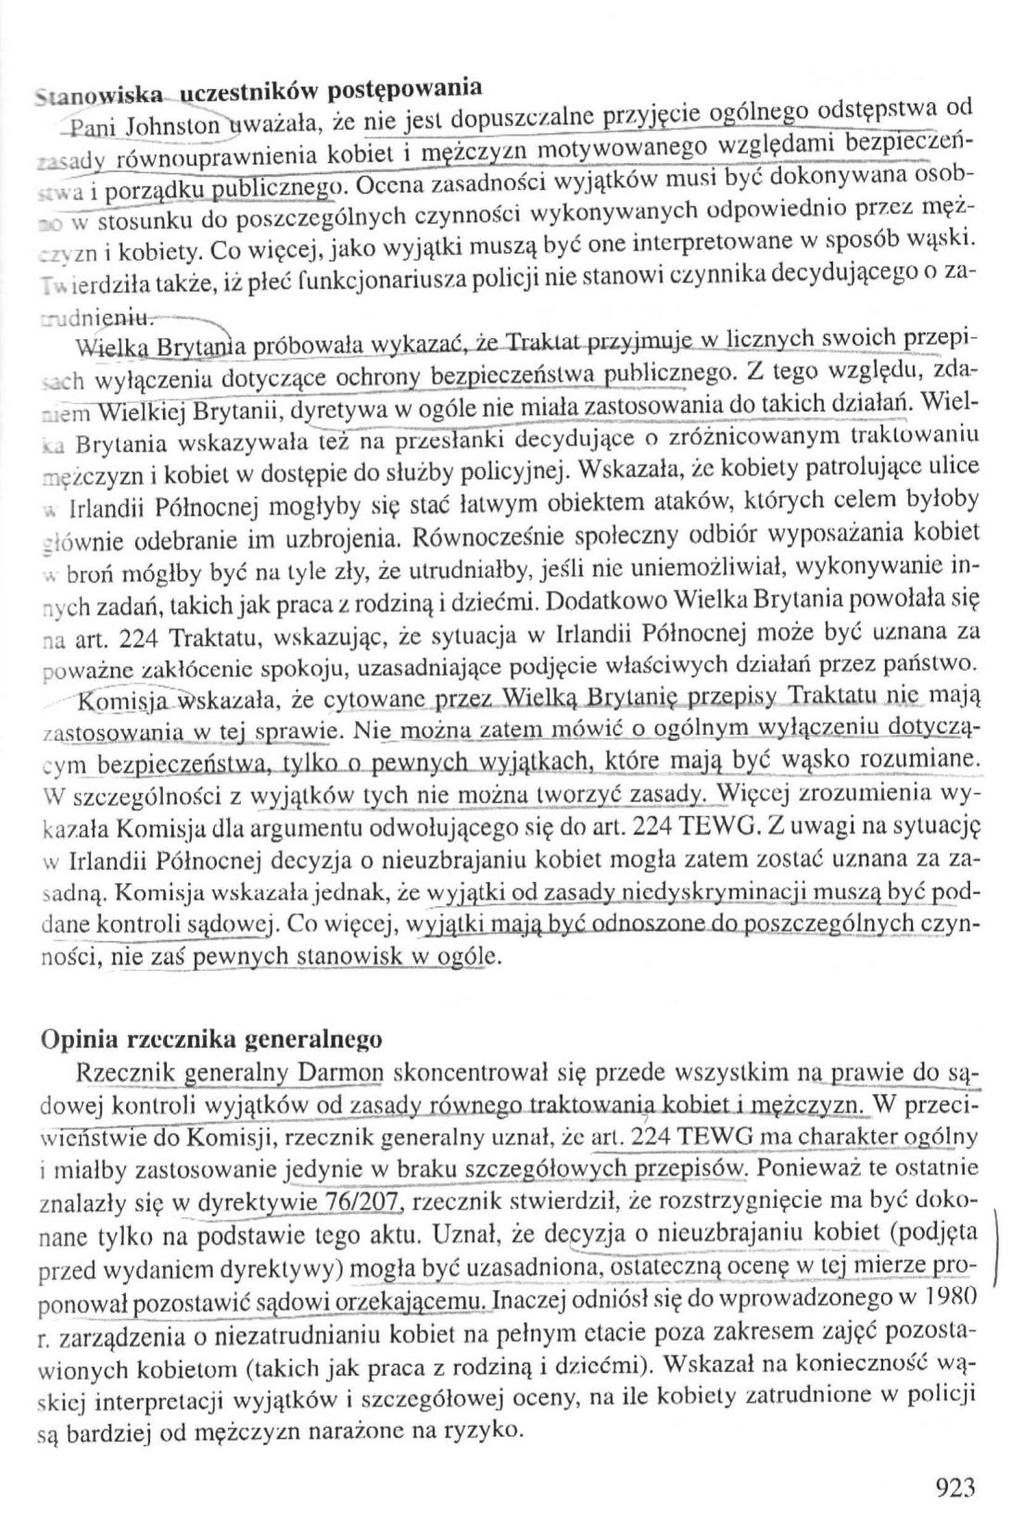 (źródło; W. Czapliński, R. Ostrihansky, P. Saganek, A.